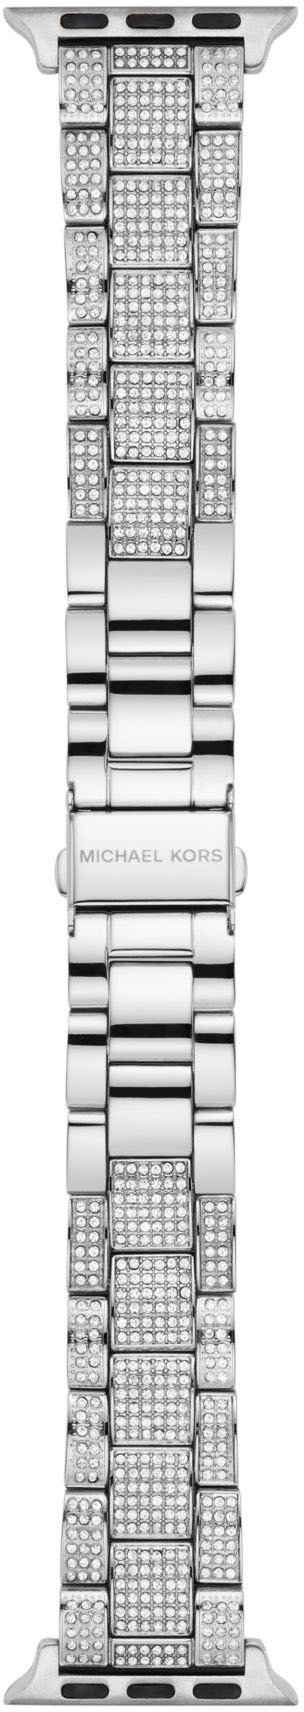 MICHAEL KORS Smartwatch-Armband Apple Strap, MKS8006, Geschenkset, Wechselarmband, Ersatzarmband für Damen & Herren, unisex